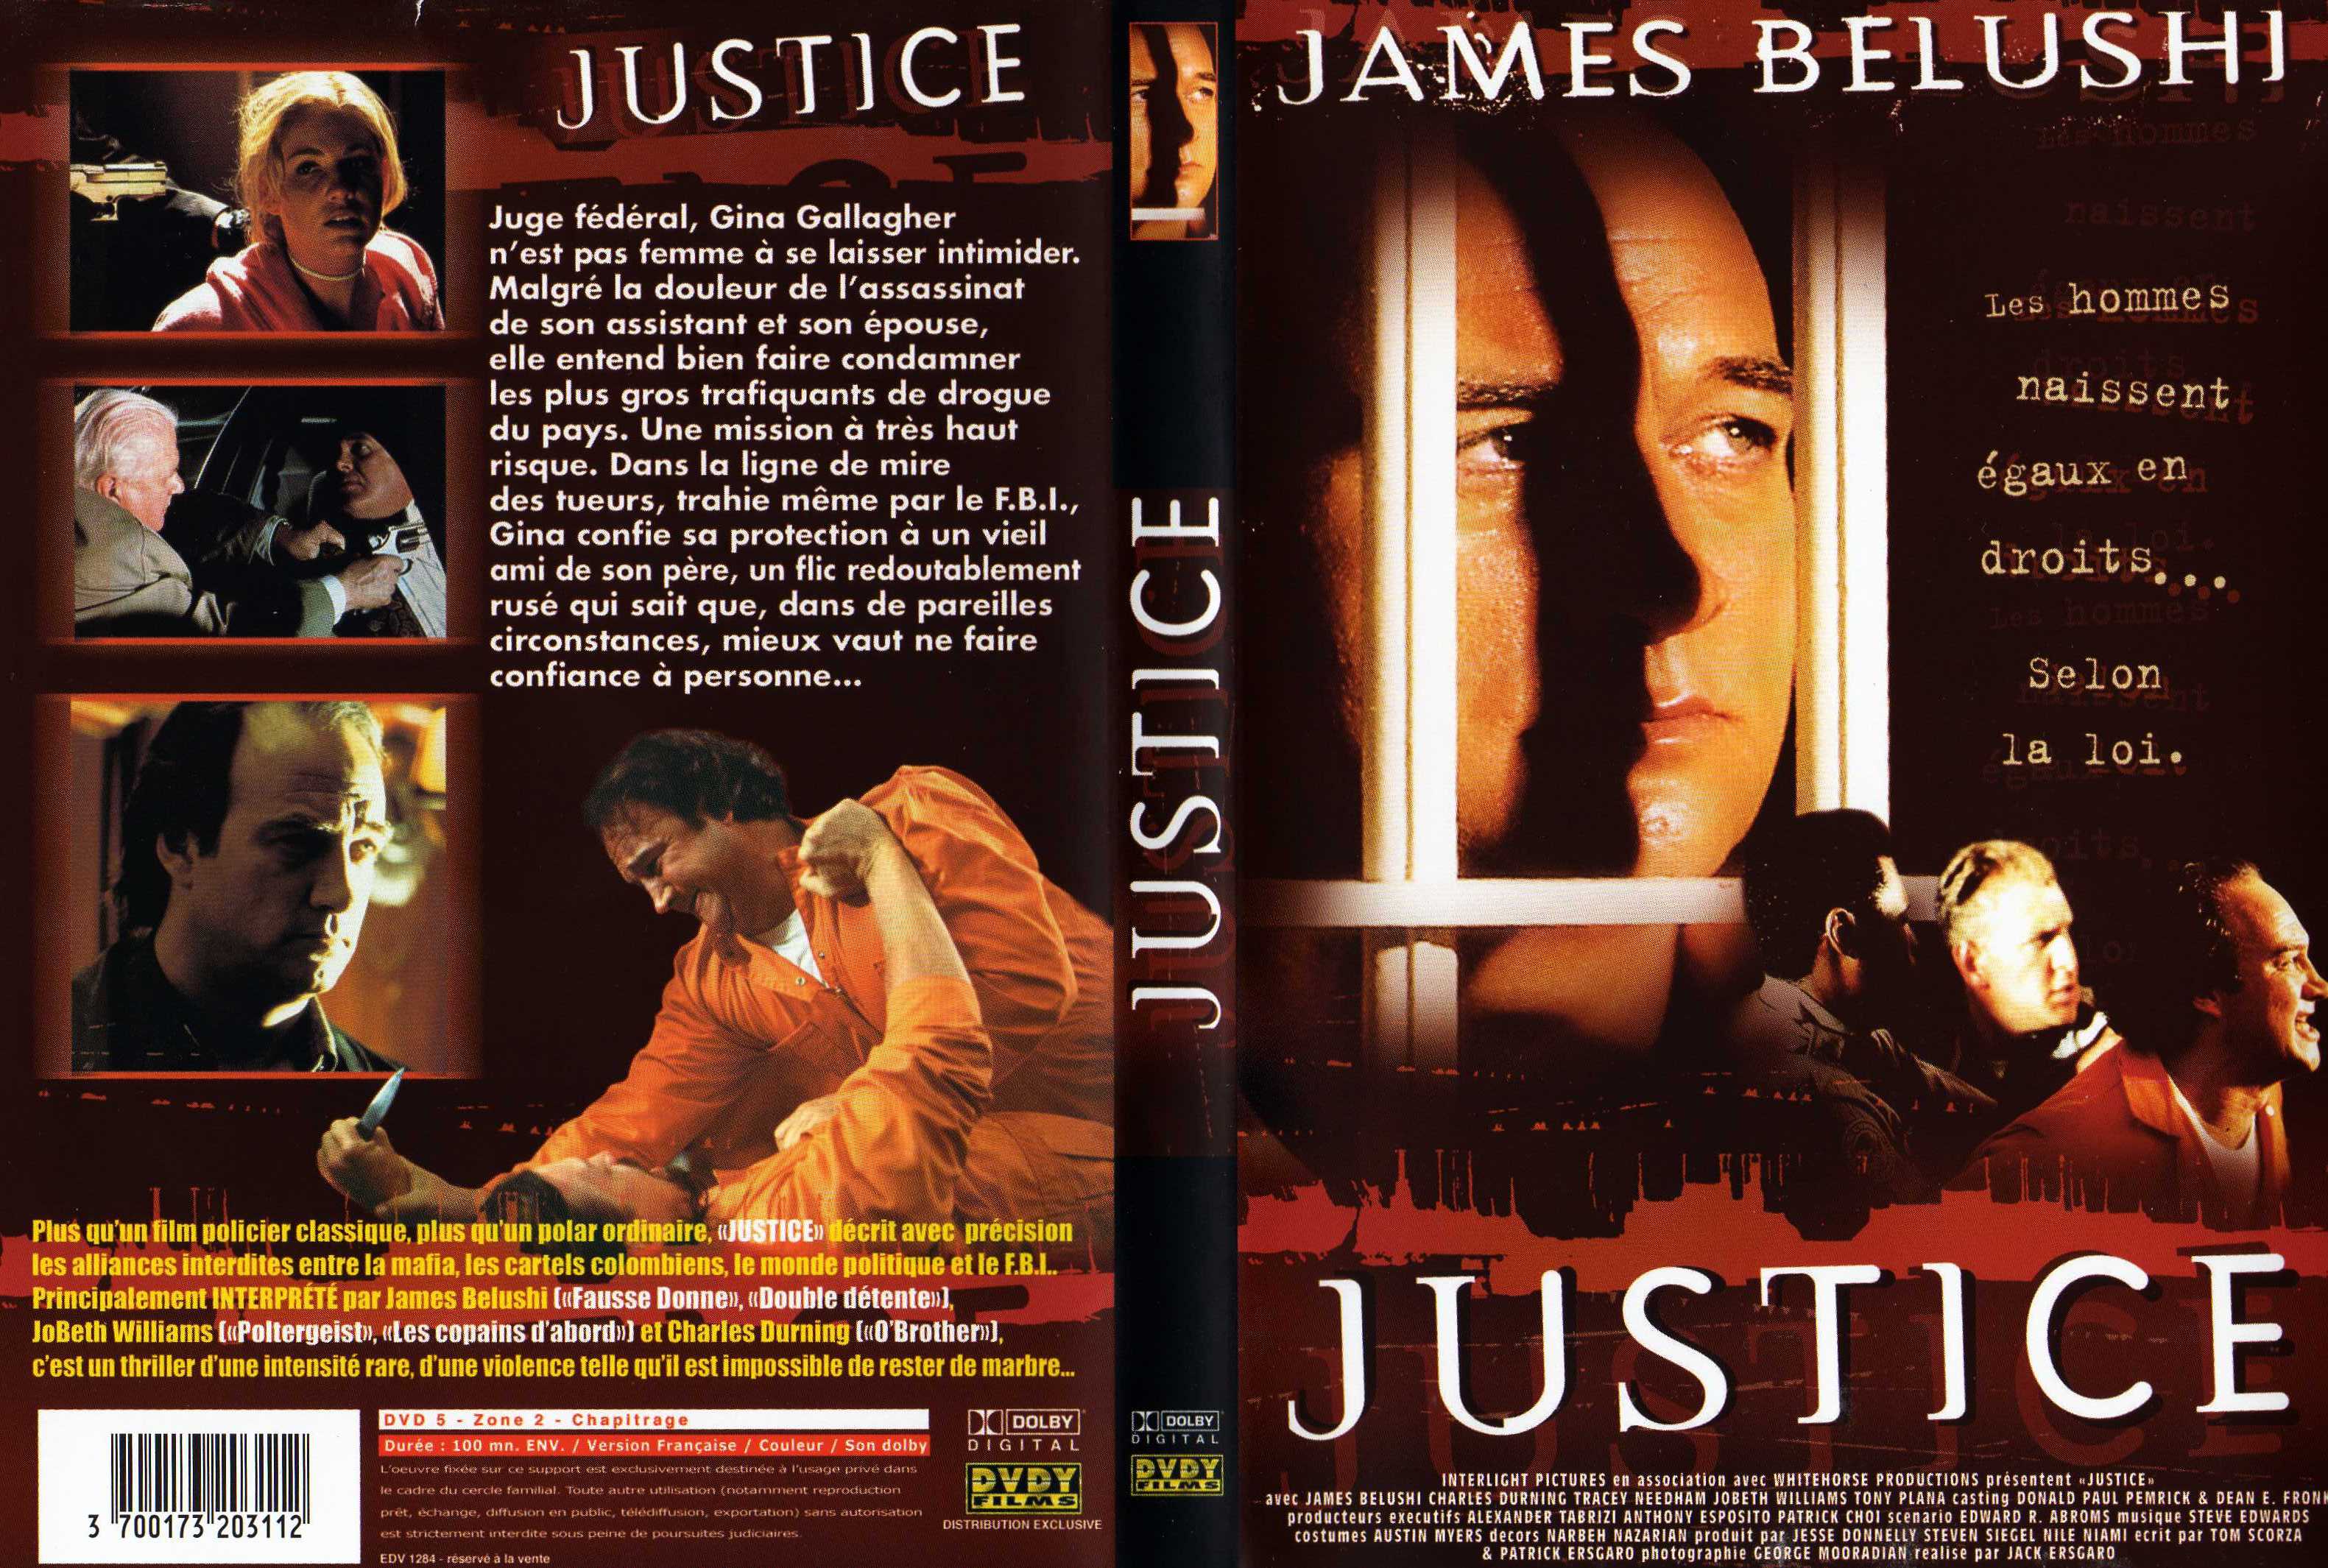 Jaquette DVD Justice